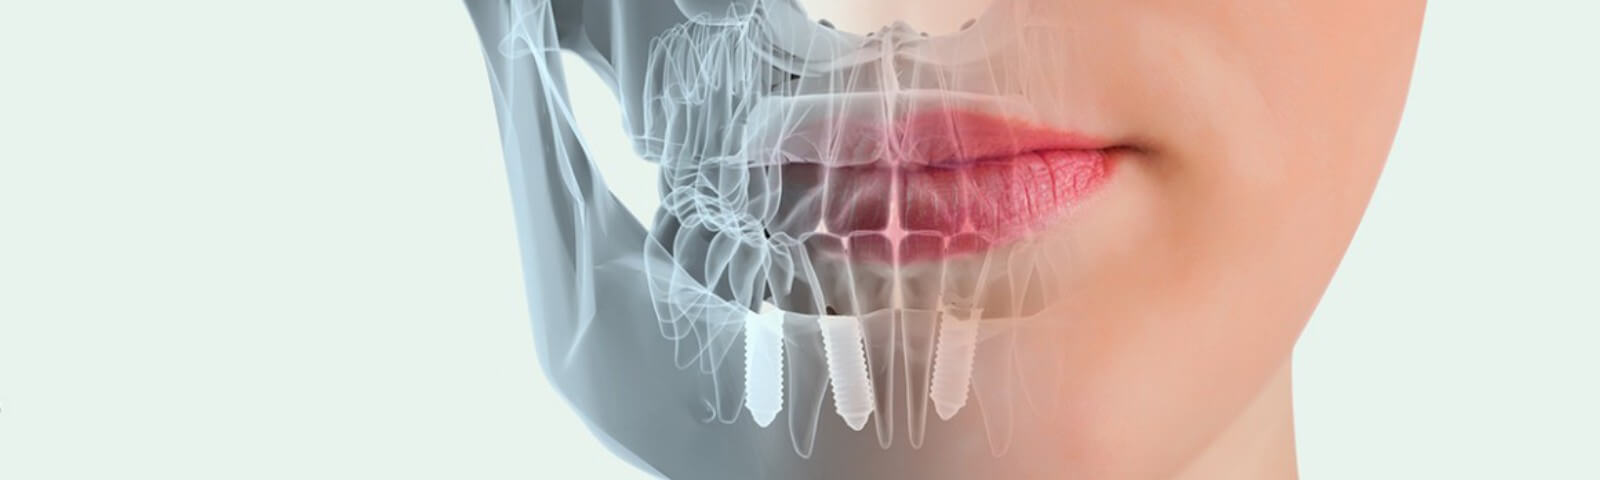 implantes-dentales-ventajas